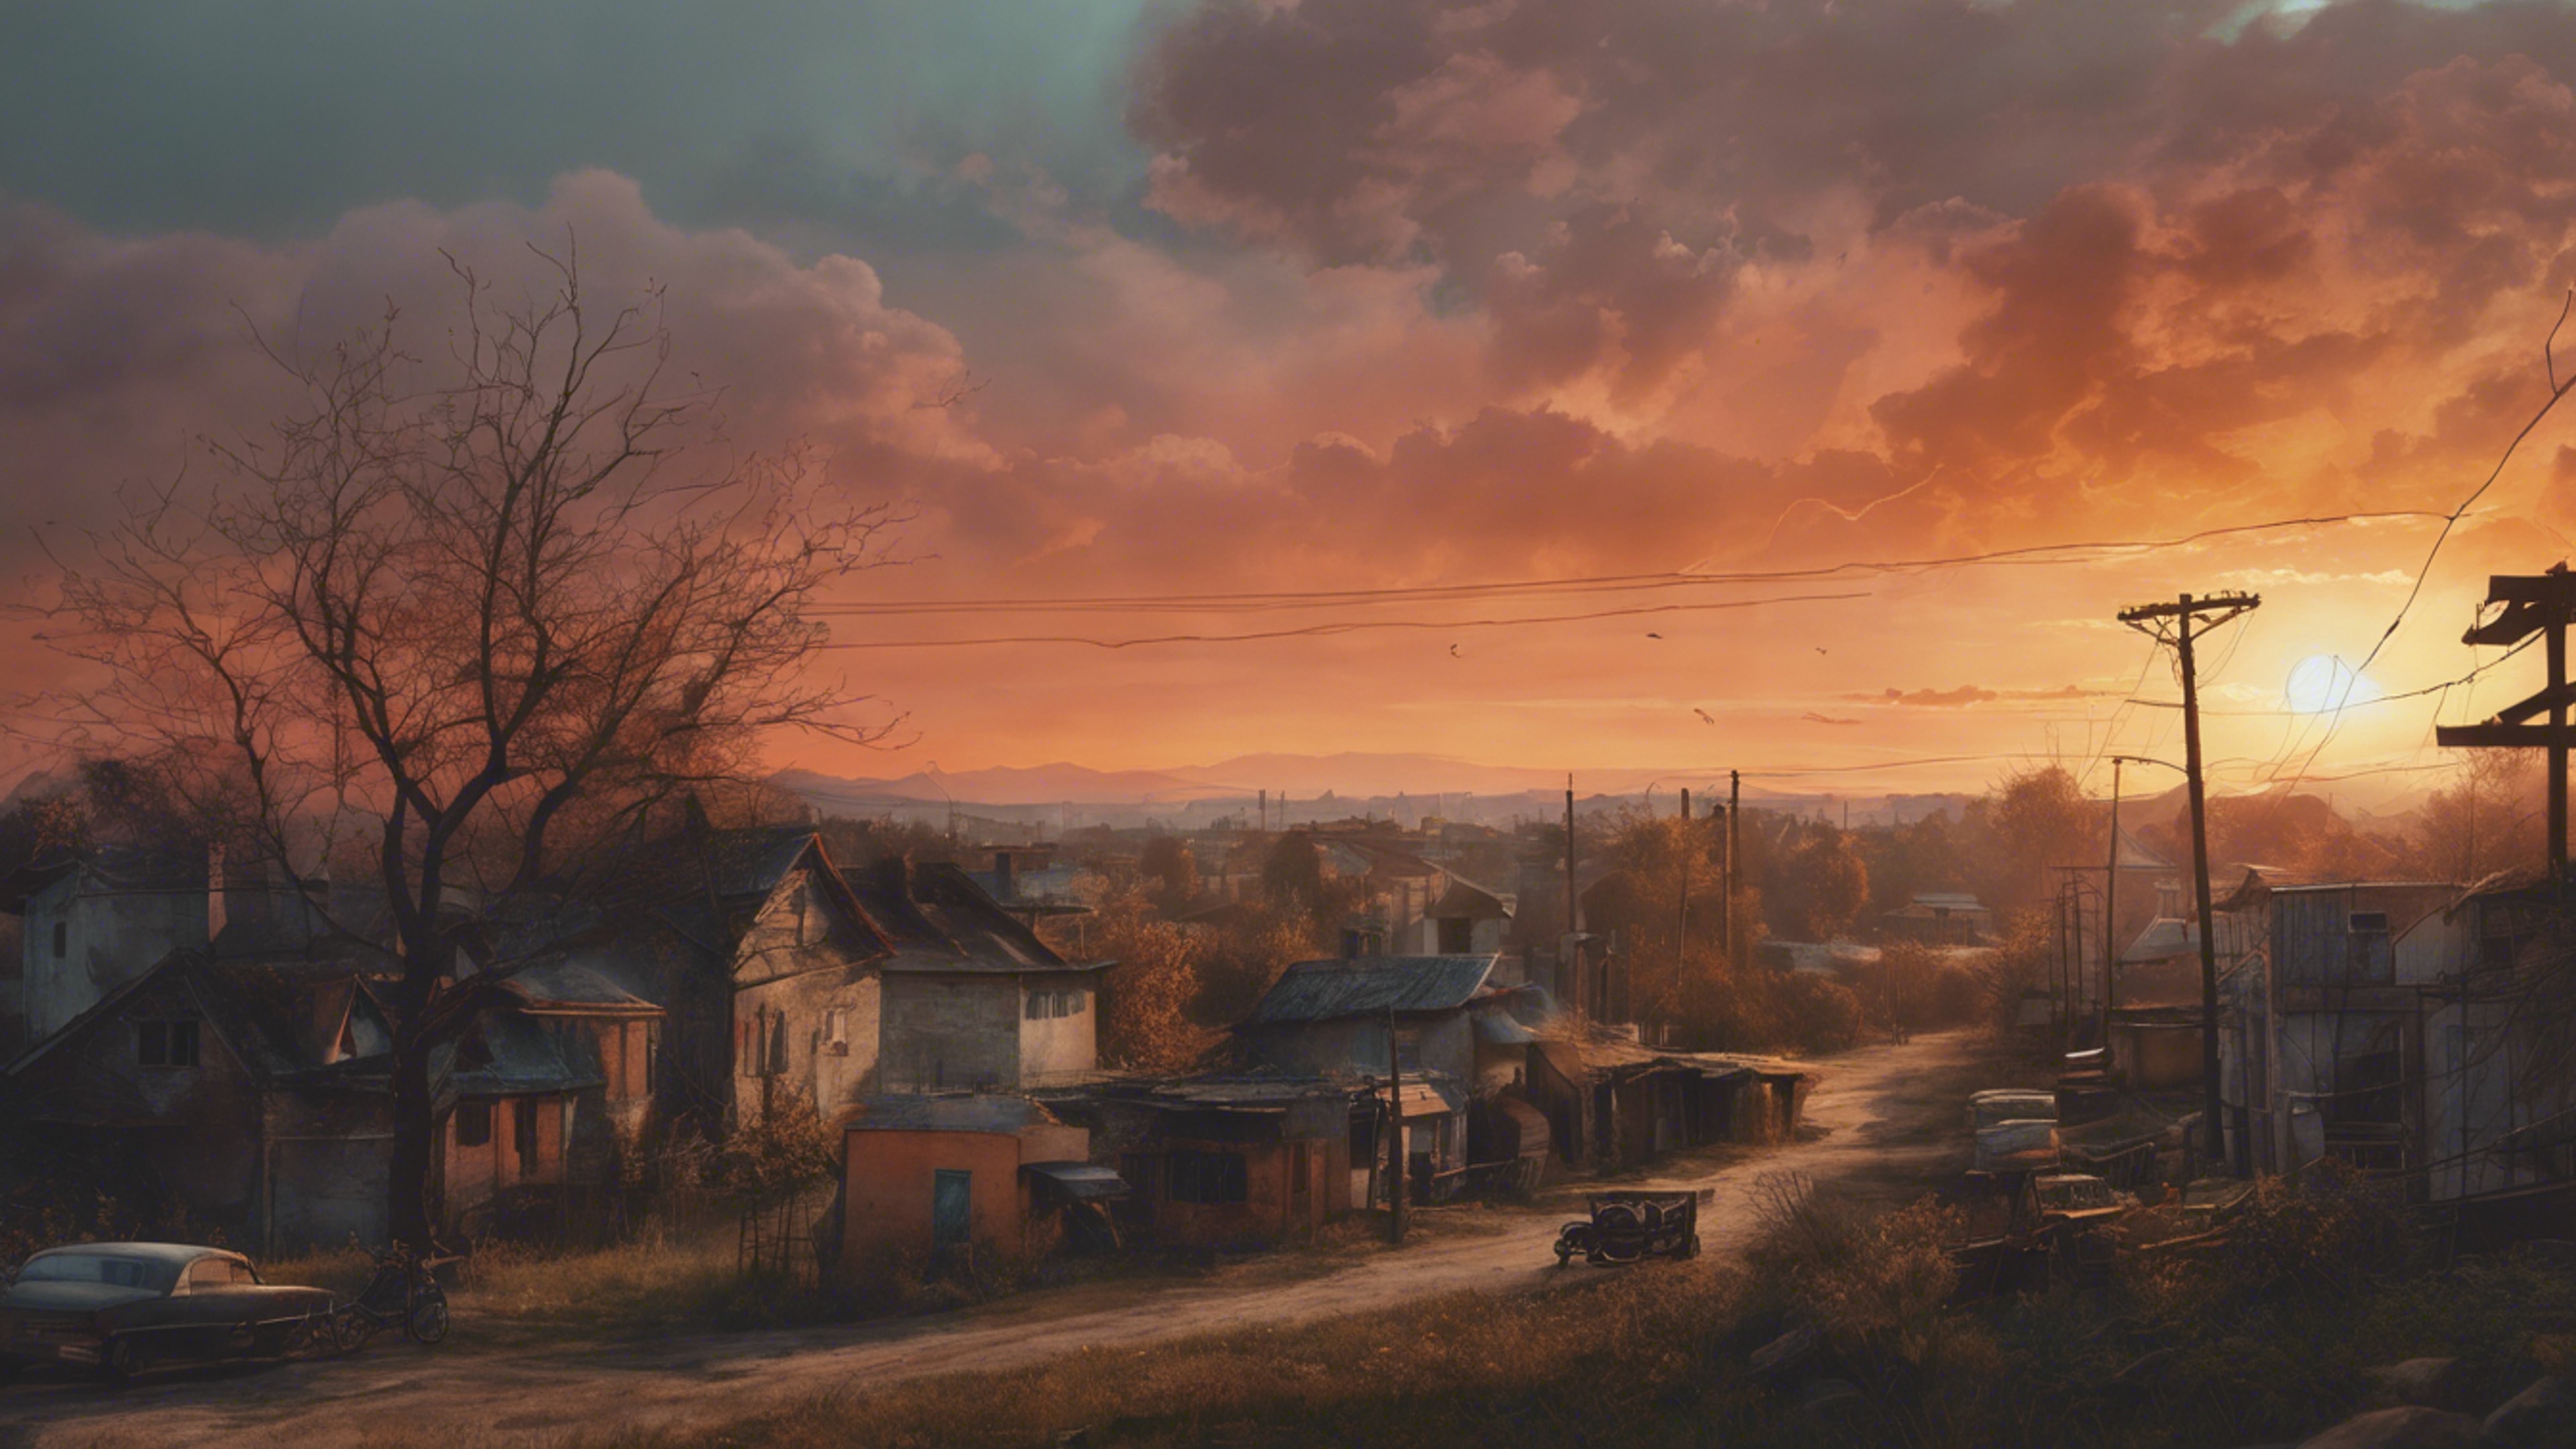 An evocative painting of a nostalgic sunset over a forgotten hometown. Wallpaper[c4b7fcd1dd4d40f1b7ab]